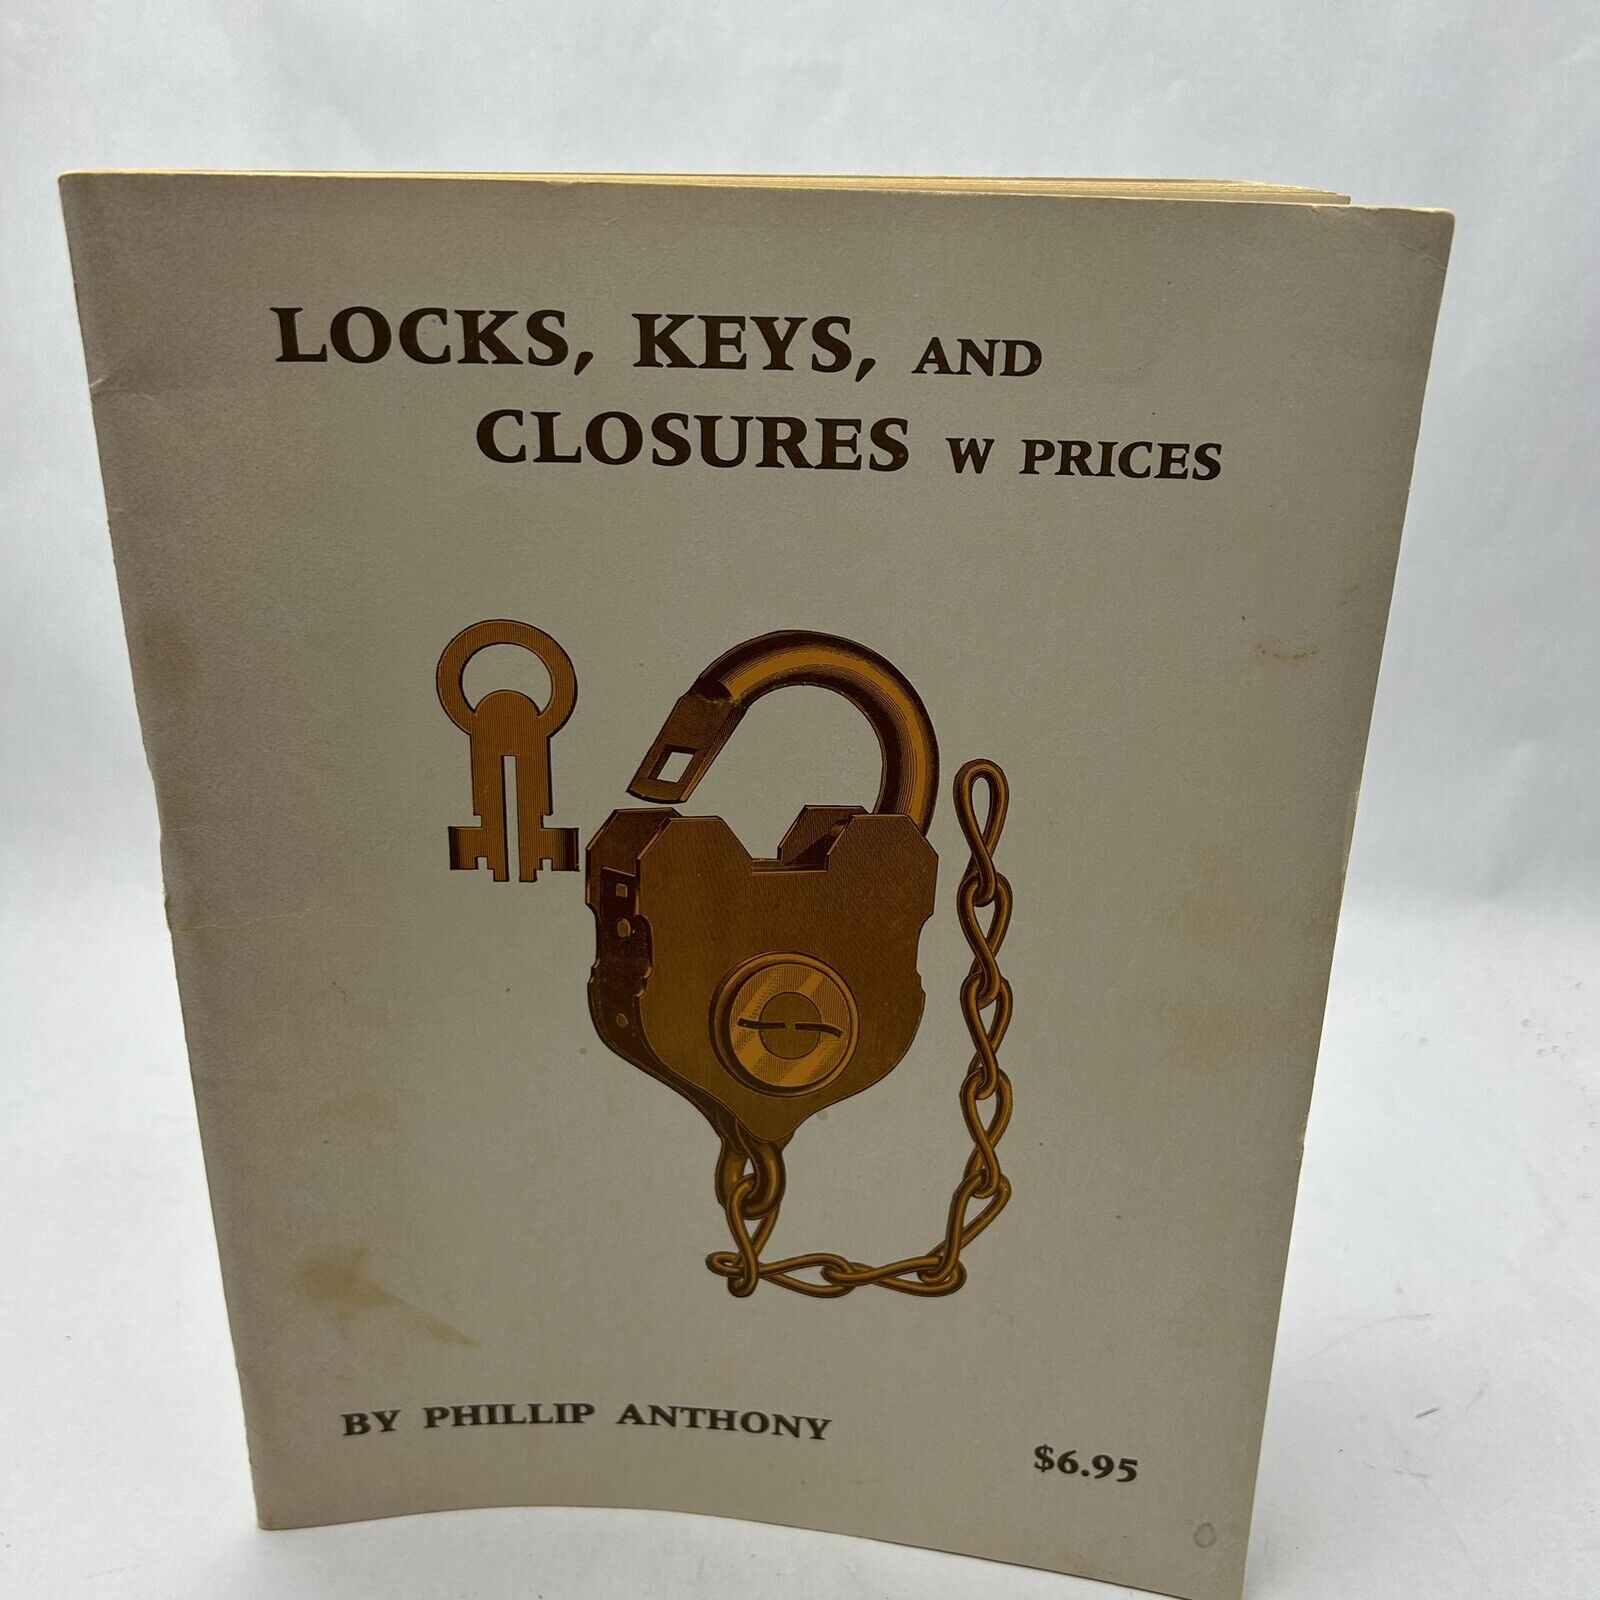 Locks, Keys, and Closures w prices